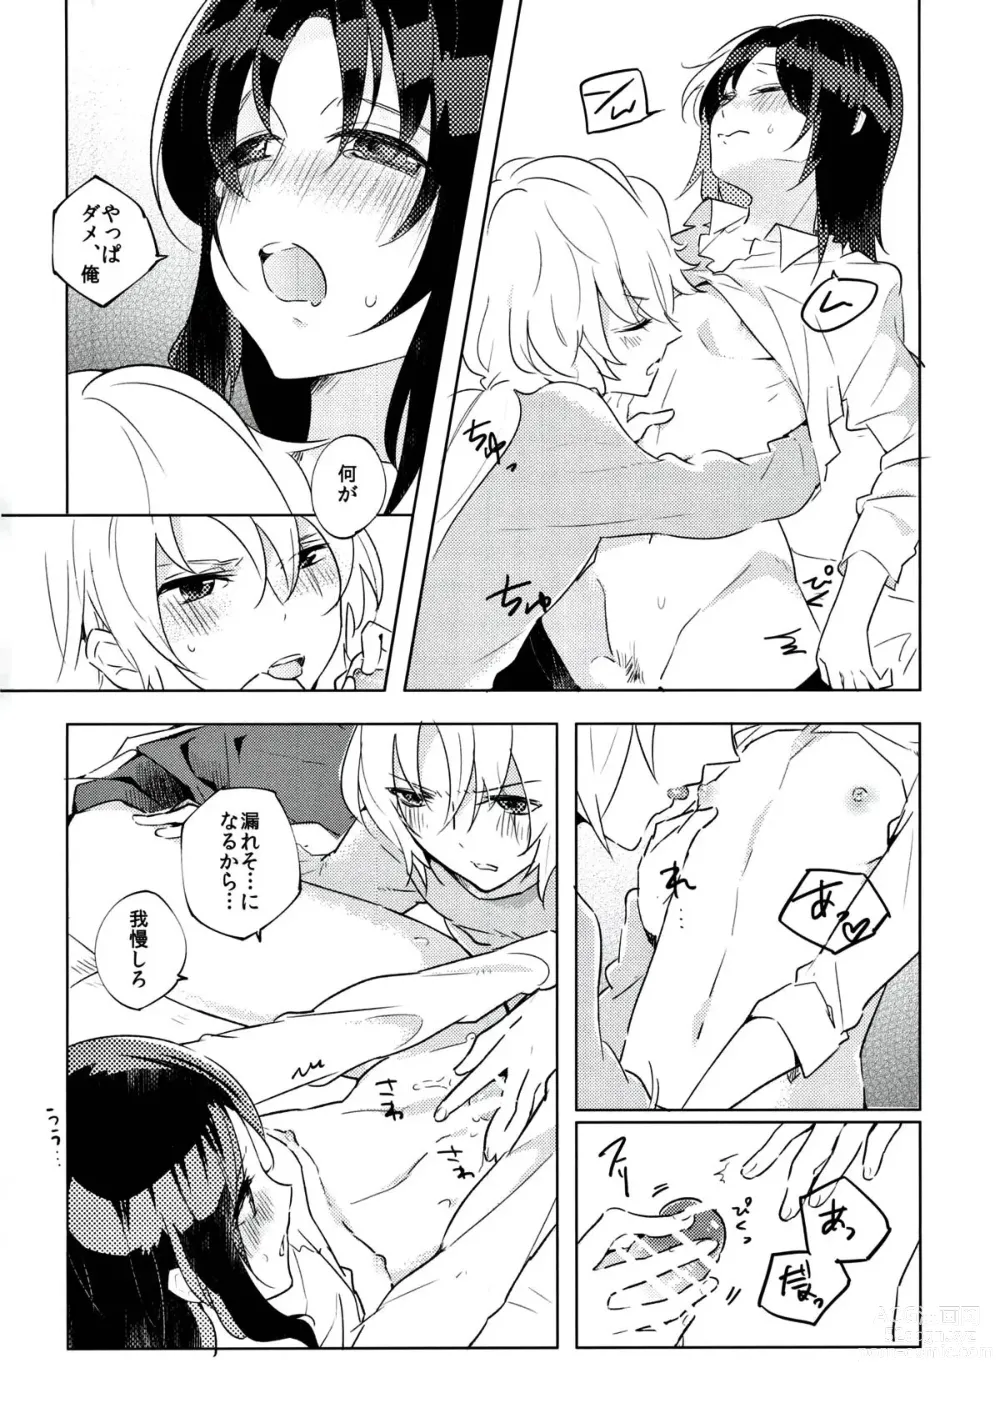 Page 11 of doujinshi Good night and morning call